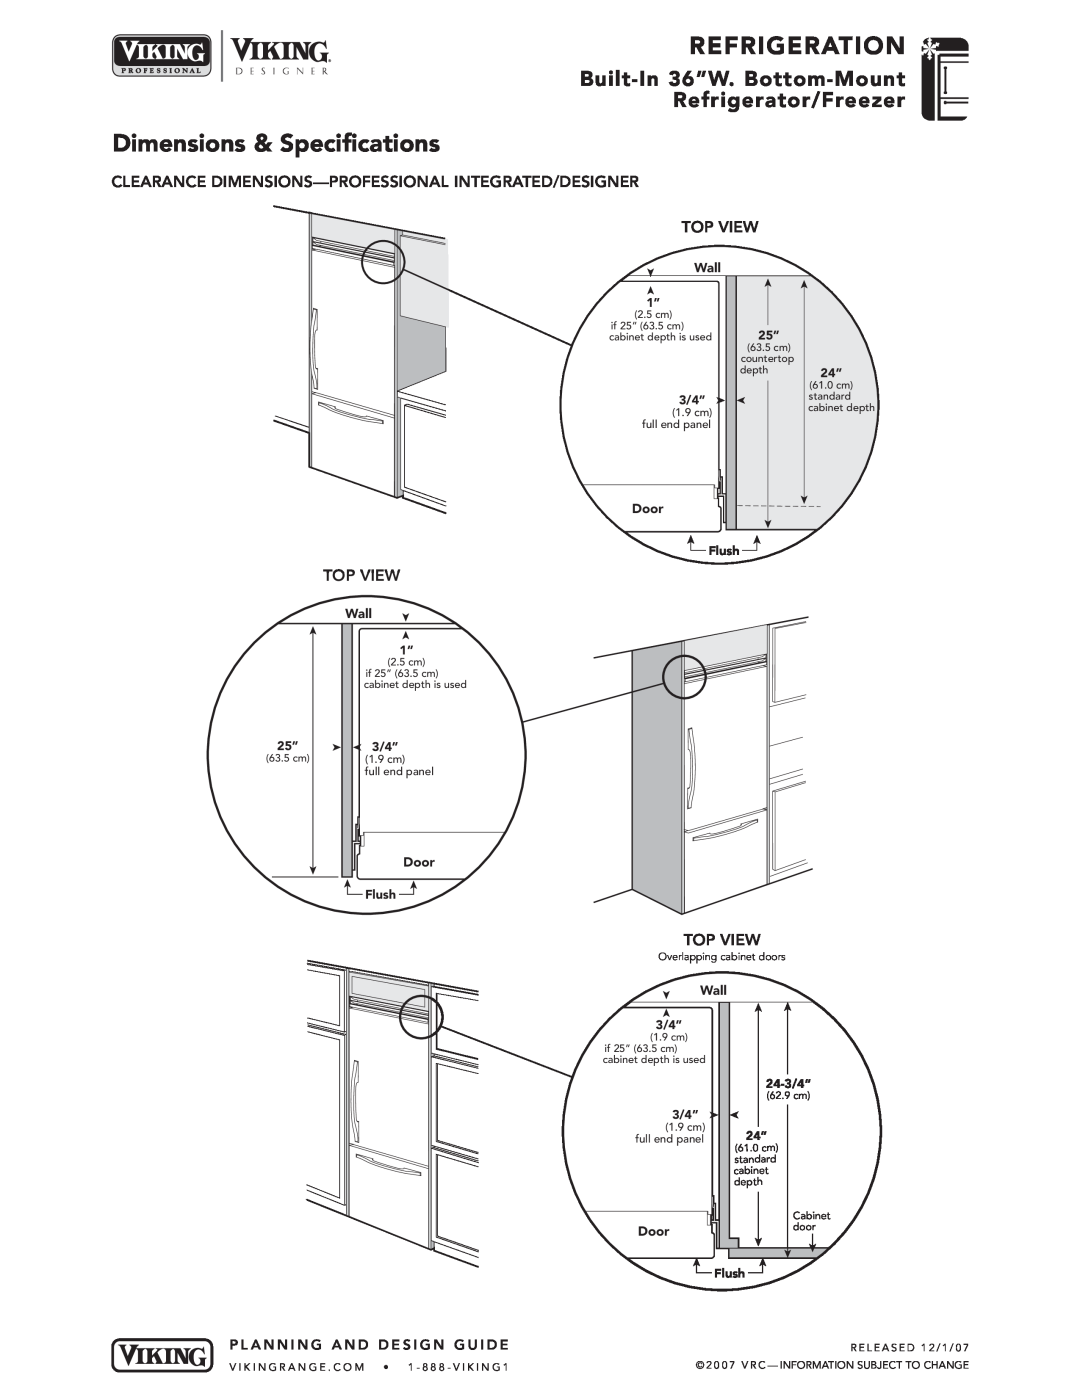 Viking VIBB363 Refrigeration, Dimensions & Specifications, Built-In 36”W. Bottom-Mount Refrigerator/Freezer, Wall, Door 